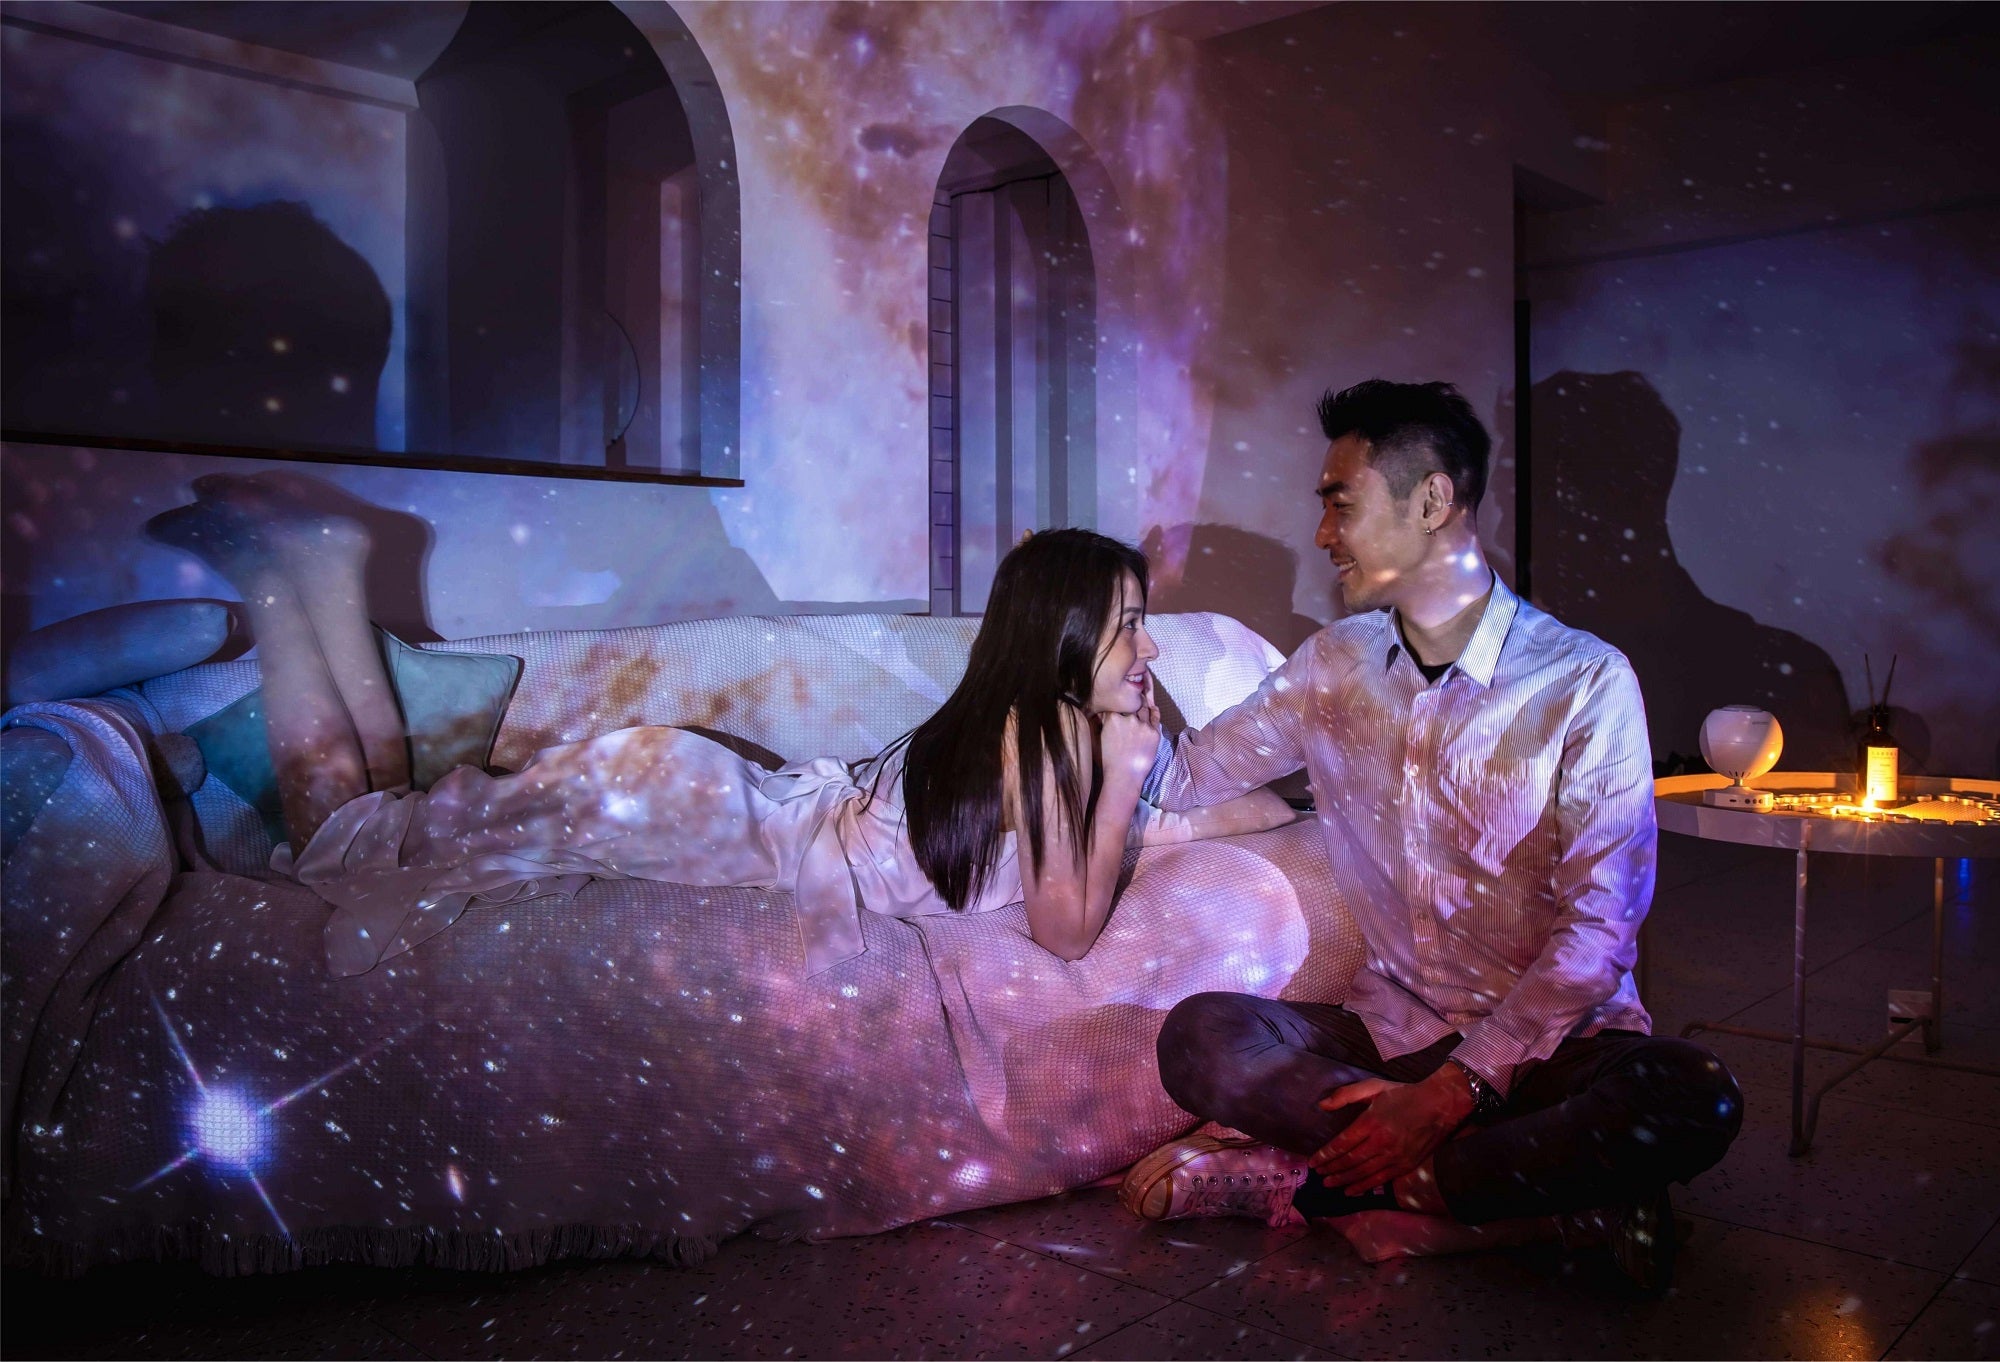 Galaxy light brings romantic atmosphere